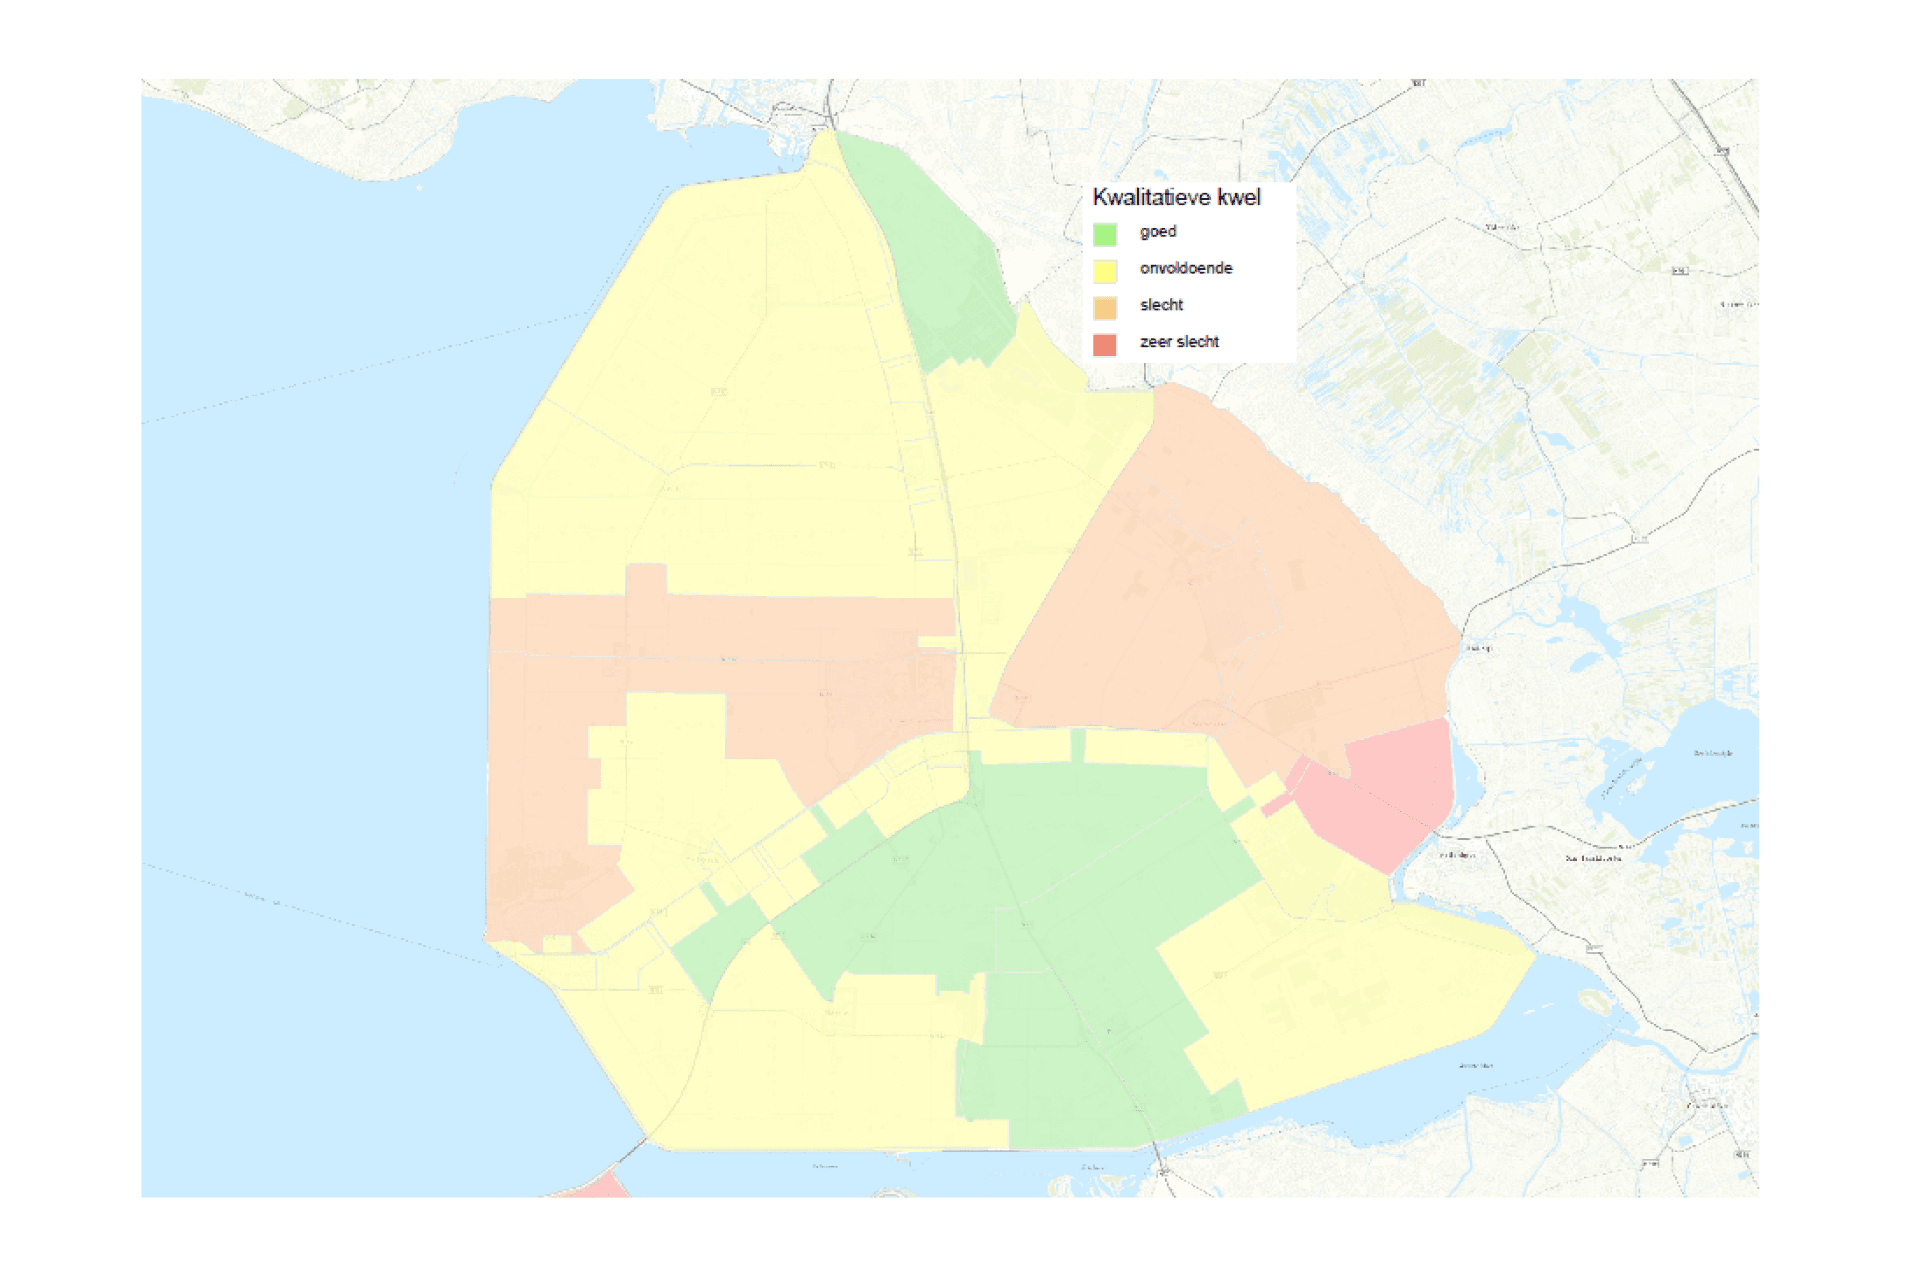 Kaart kwelkwaliteit Noordoostpolder